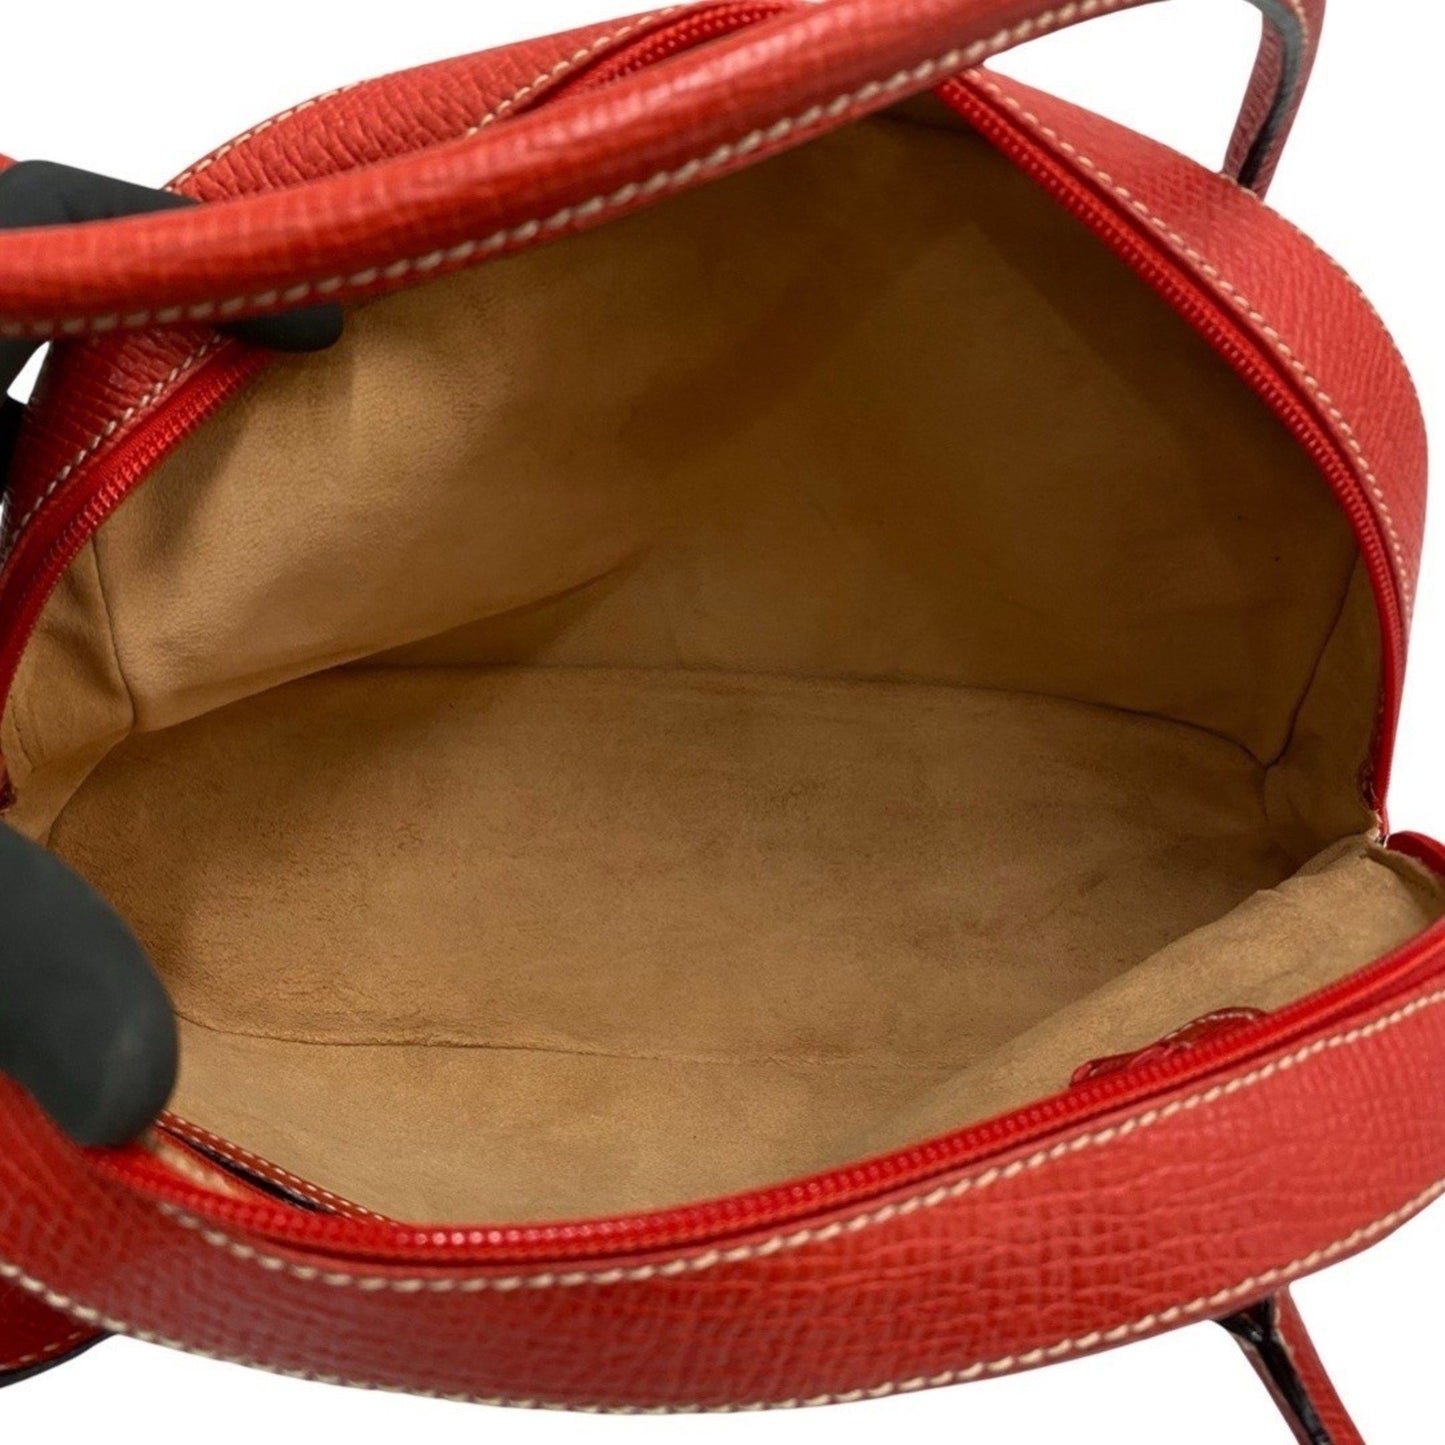 Loewe Women's Red Leather Handbag with Elegant Design in Red